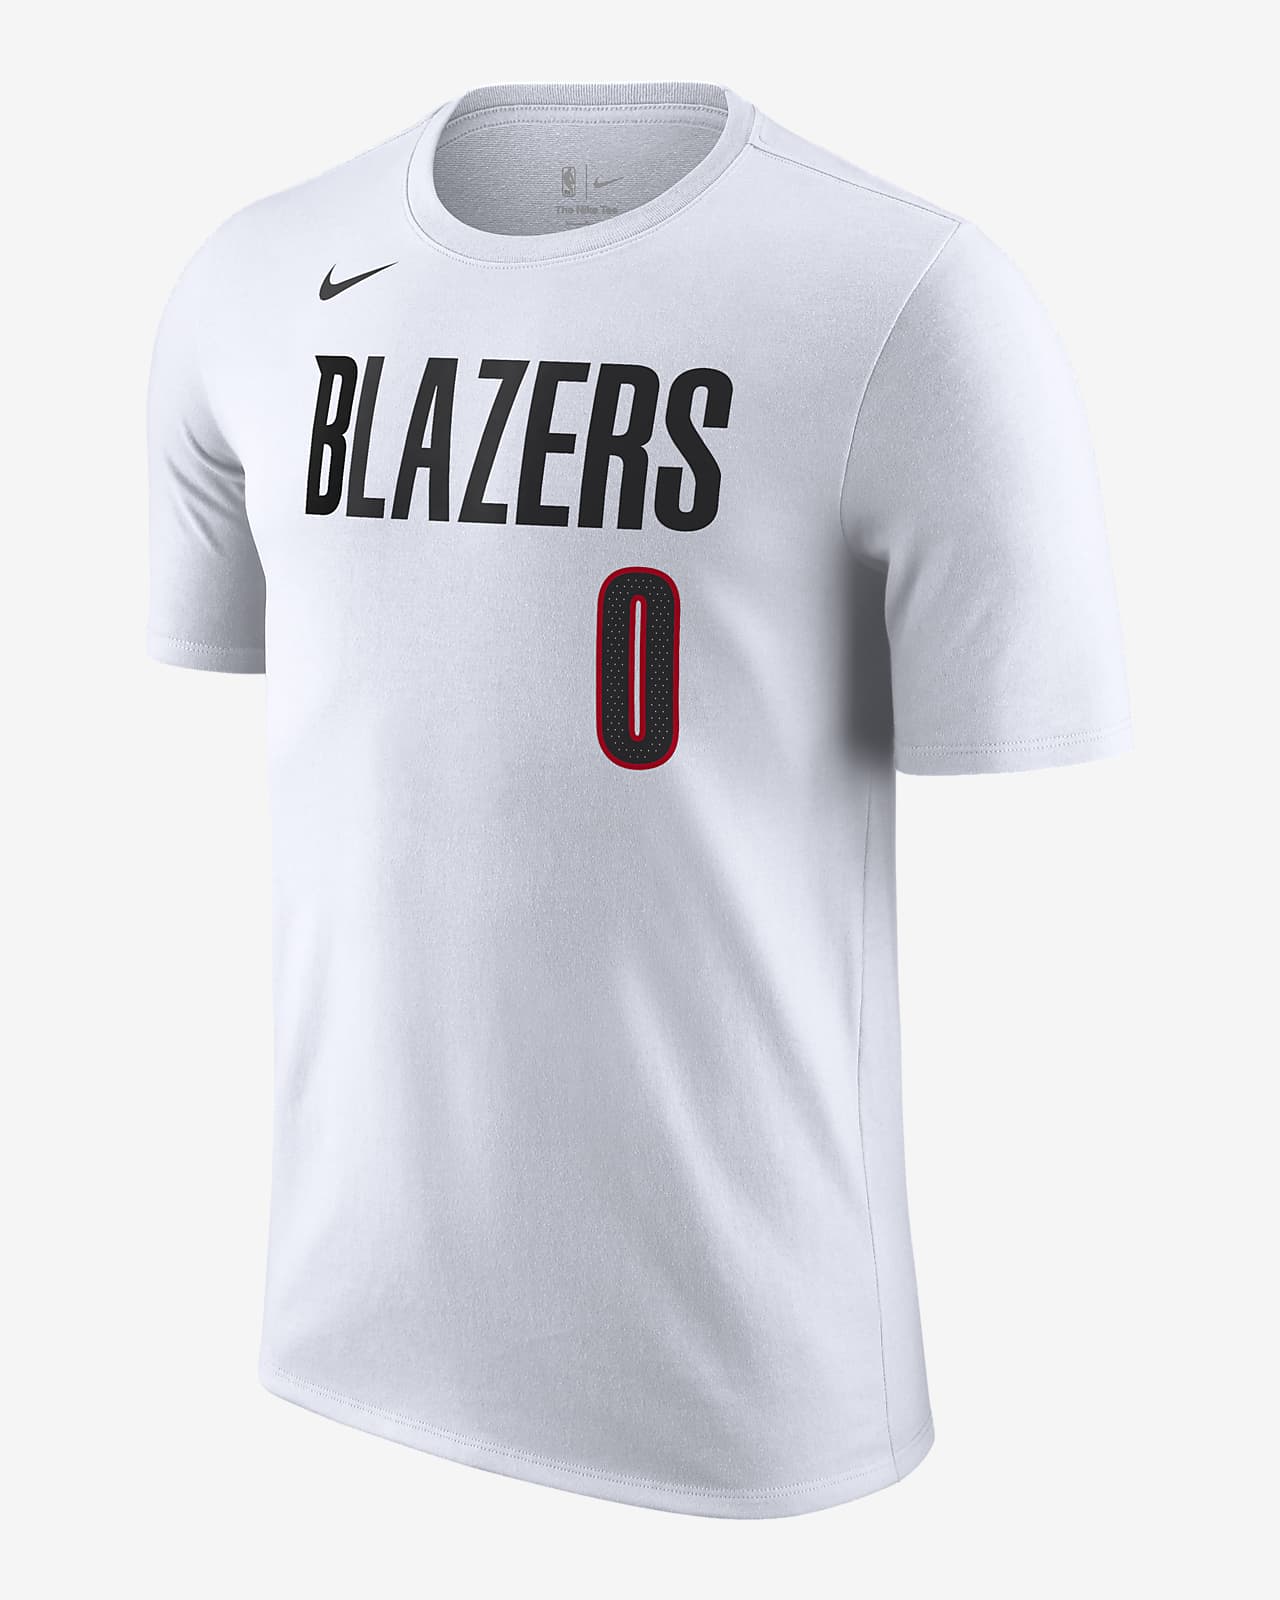 Men's Nike Red Portland Trail Blazers Elite Shooter Performance T-Shirt